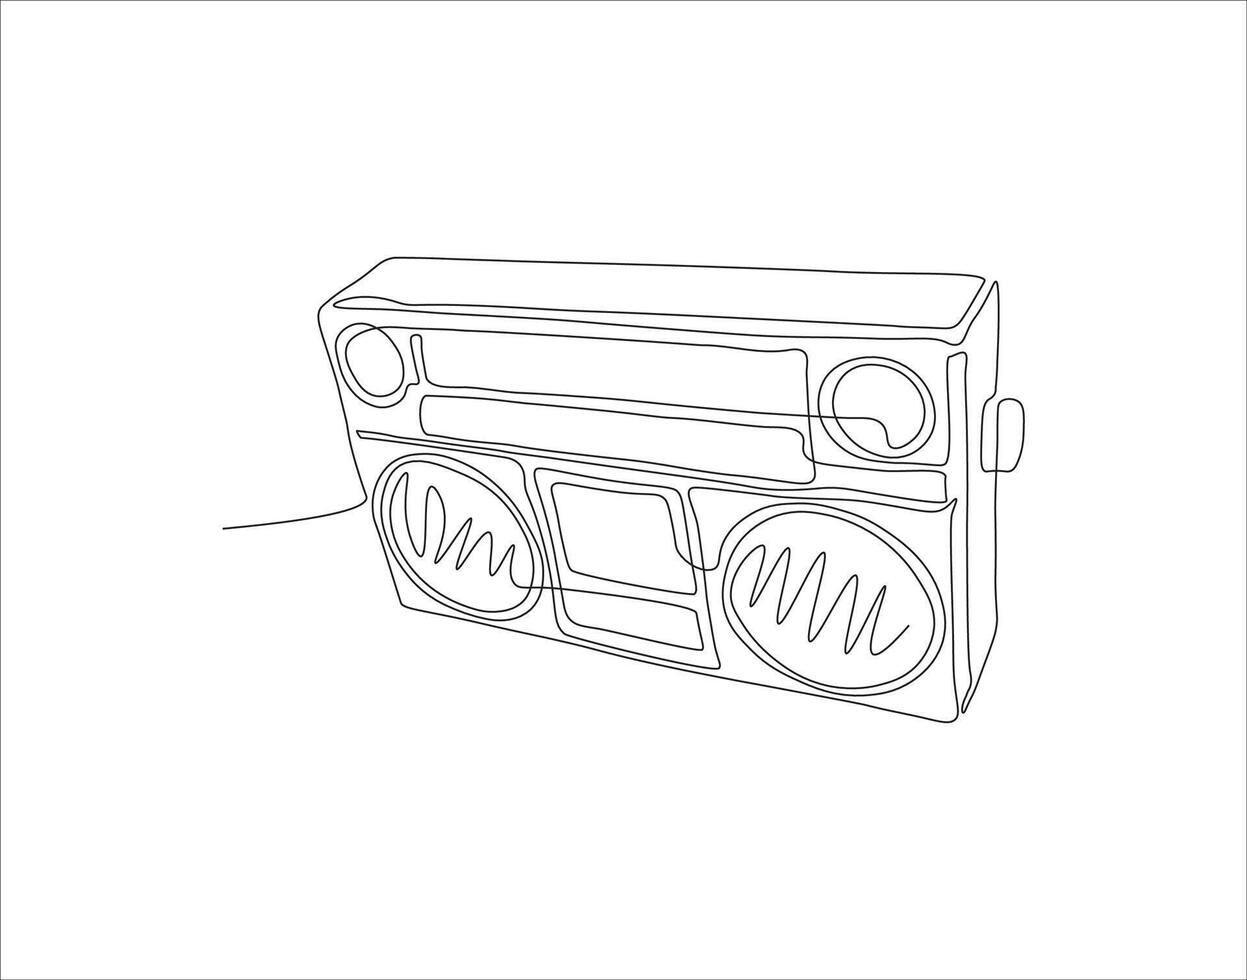 continuo línea dibujo de antiguo pasado de moda término análogo radio cinta. uno línea de radio cinta. radio cinta continuo línea Arte. editable describir. vector